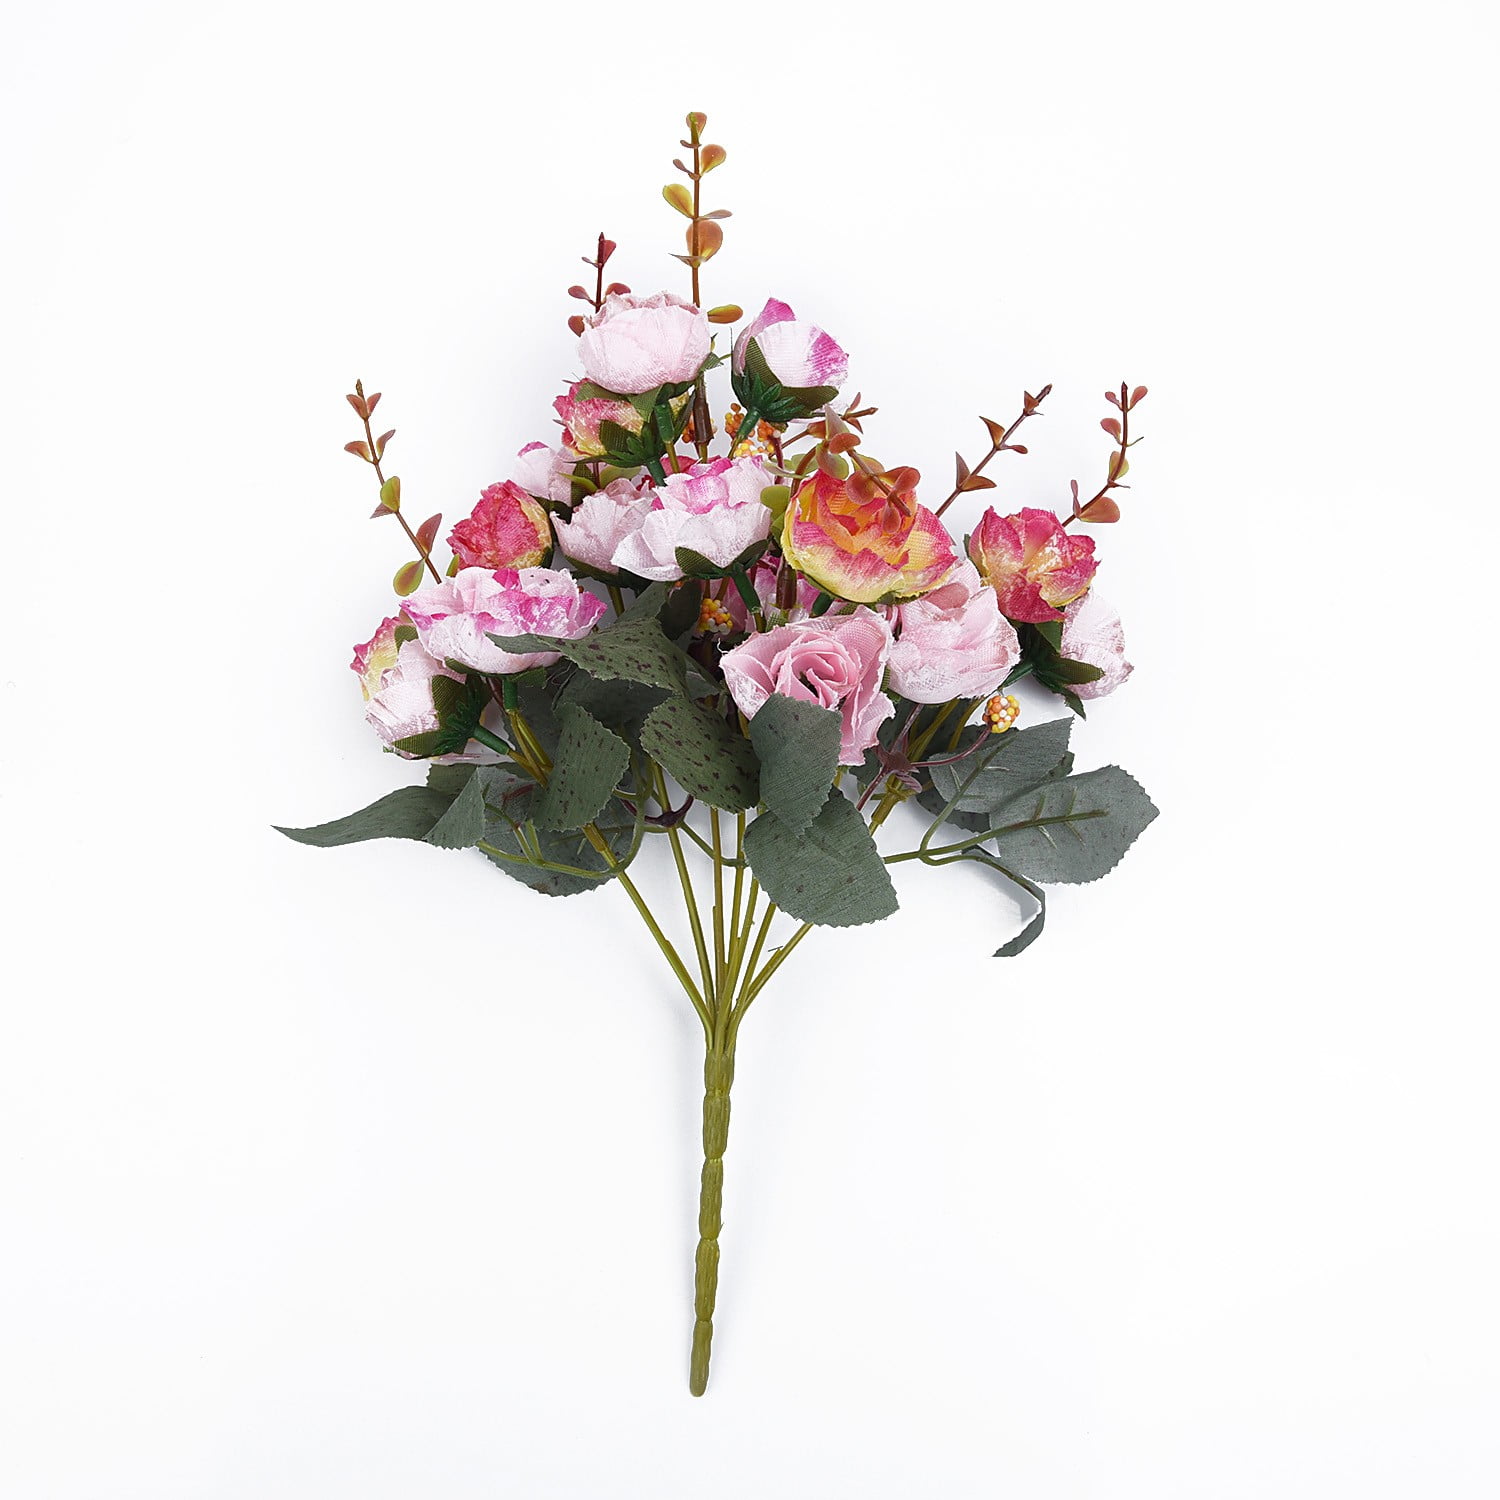 21Head Artificial Silk Rose Flower Floral Bouquet Fake Leaves Wedding Home Decor 